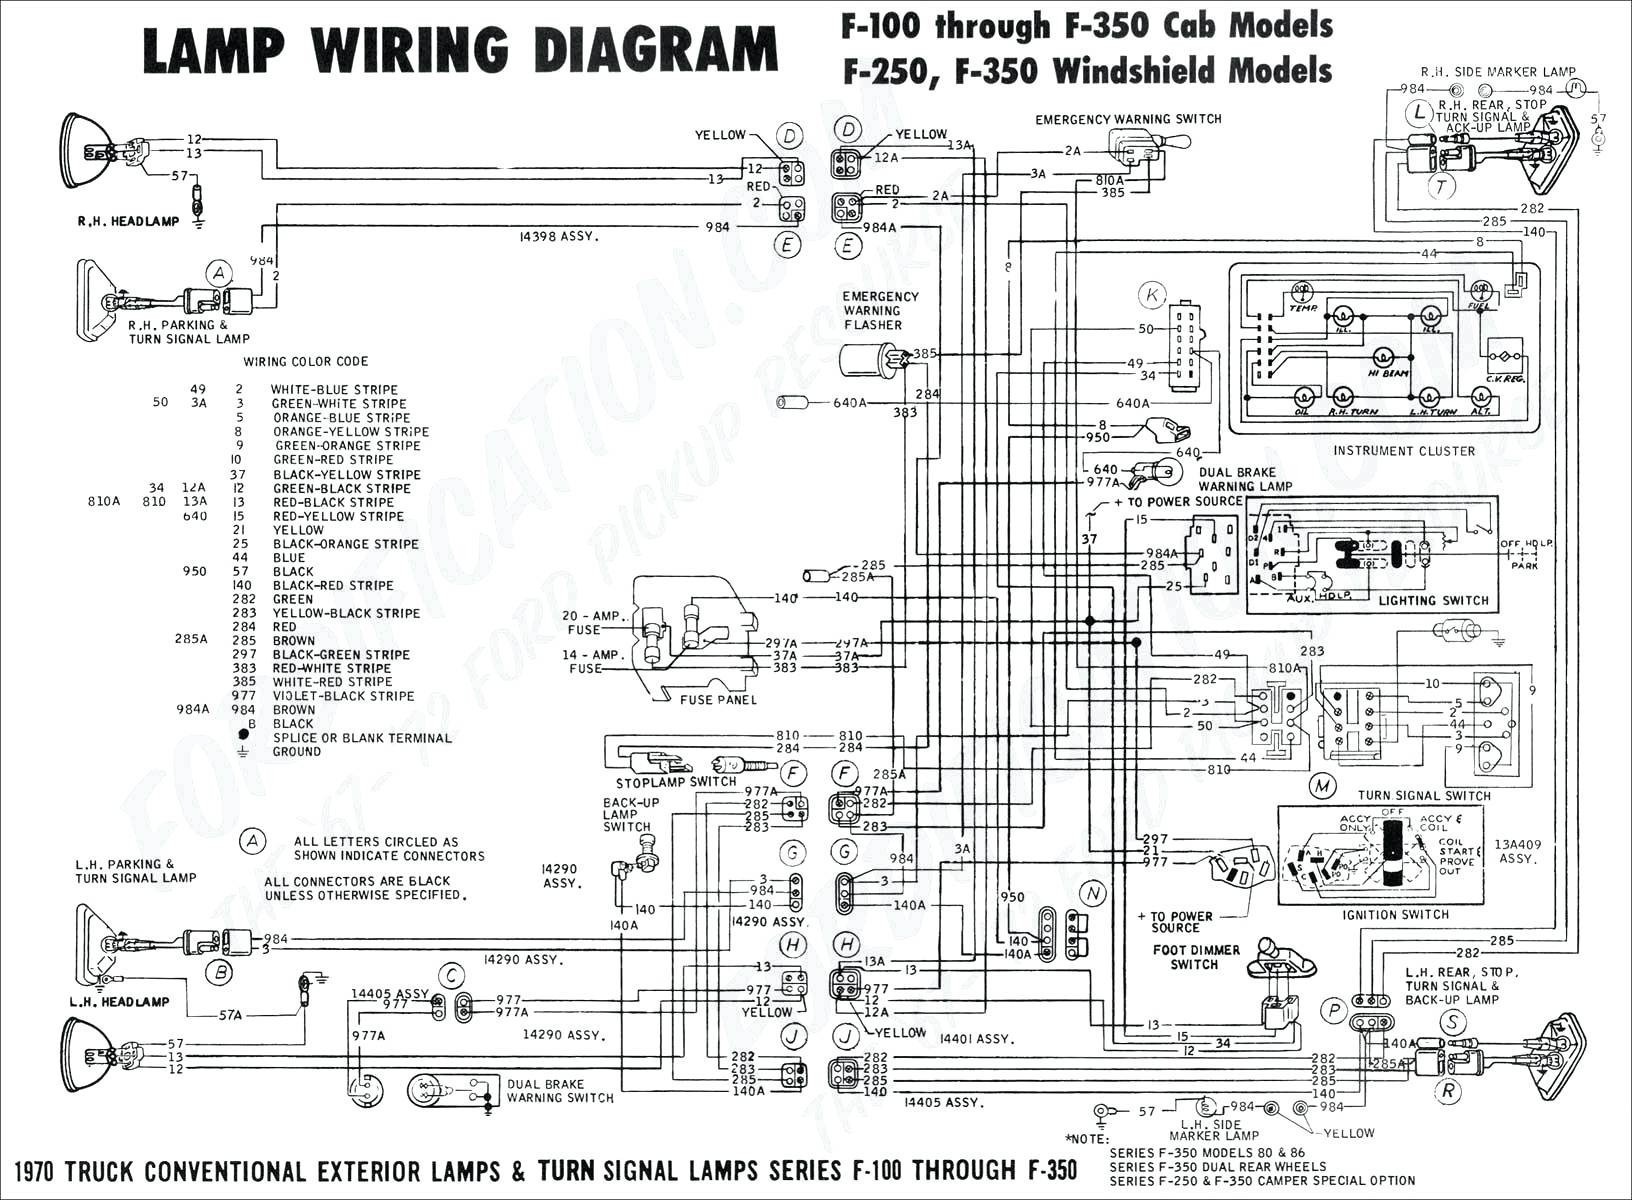 Honda Accord Parts Diagram Wiring Diagram for 1999 Honda Accord Wiring Diagram Datasource Of Honda Accord Parts Diagram